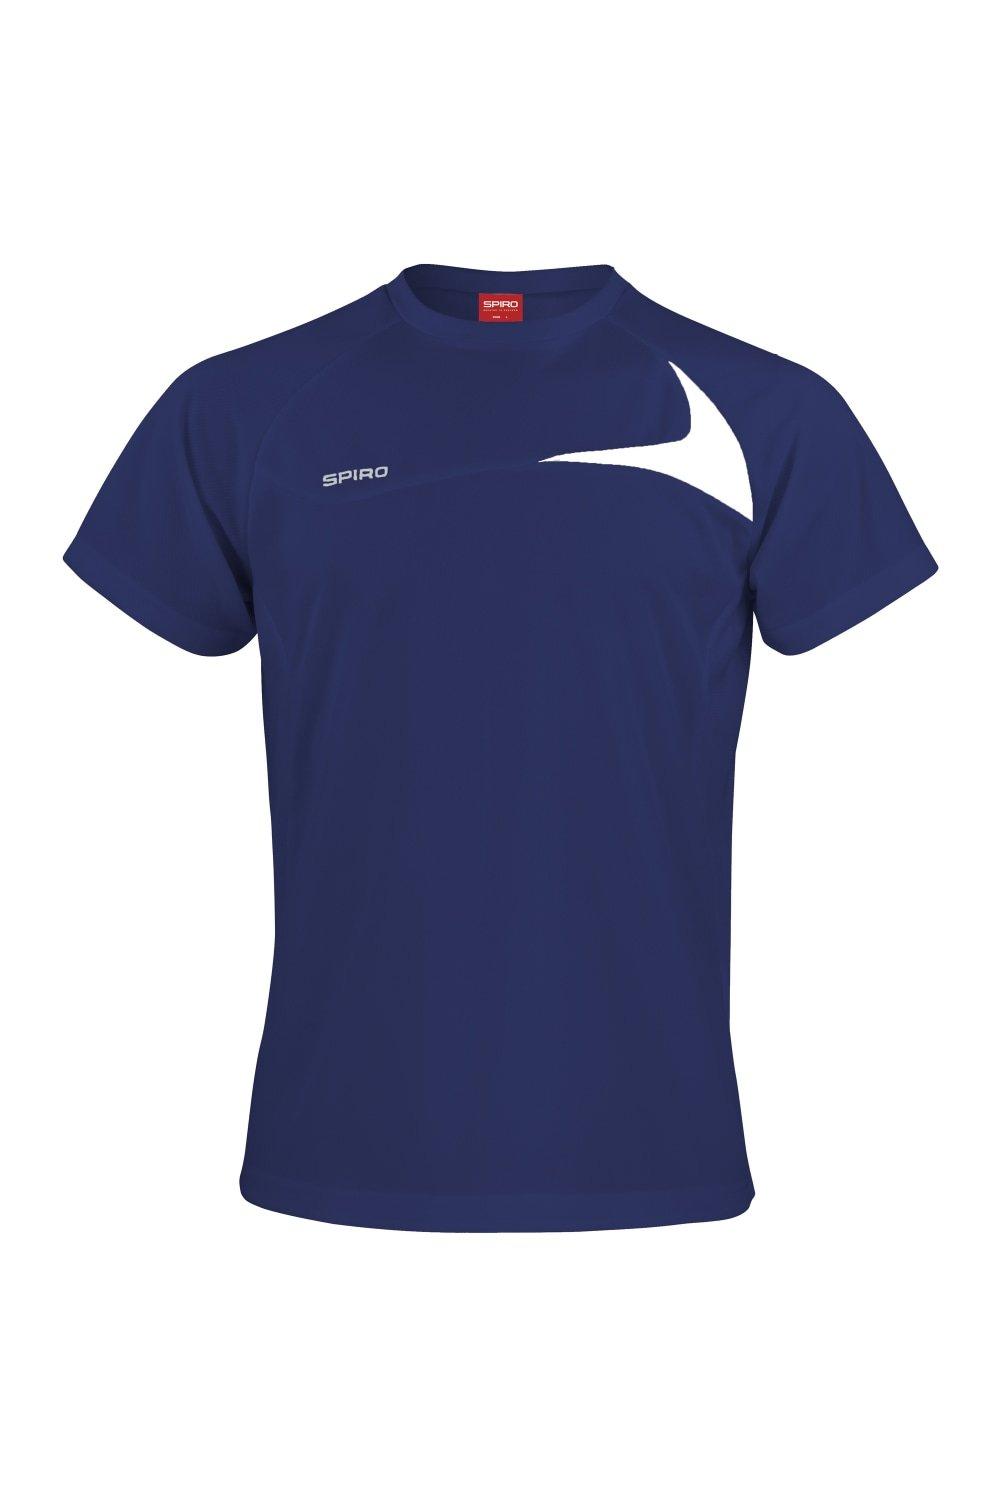 Спортивная рубашка Dash Performance для тренировок Spiro, темно-синий леггинсы dry cool redmax цвет thyme